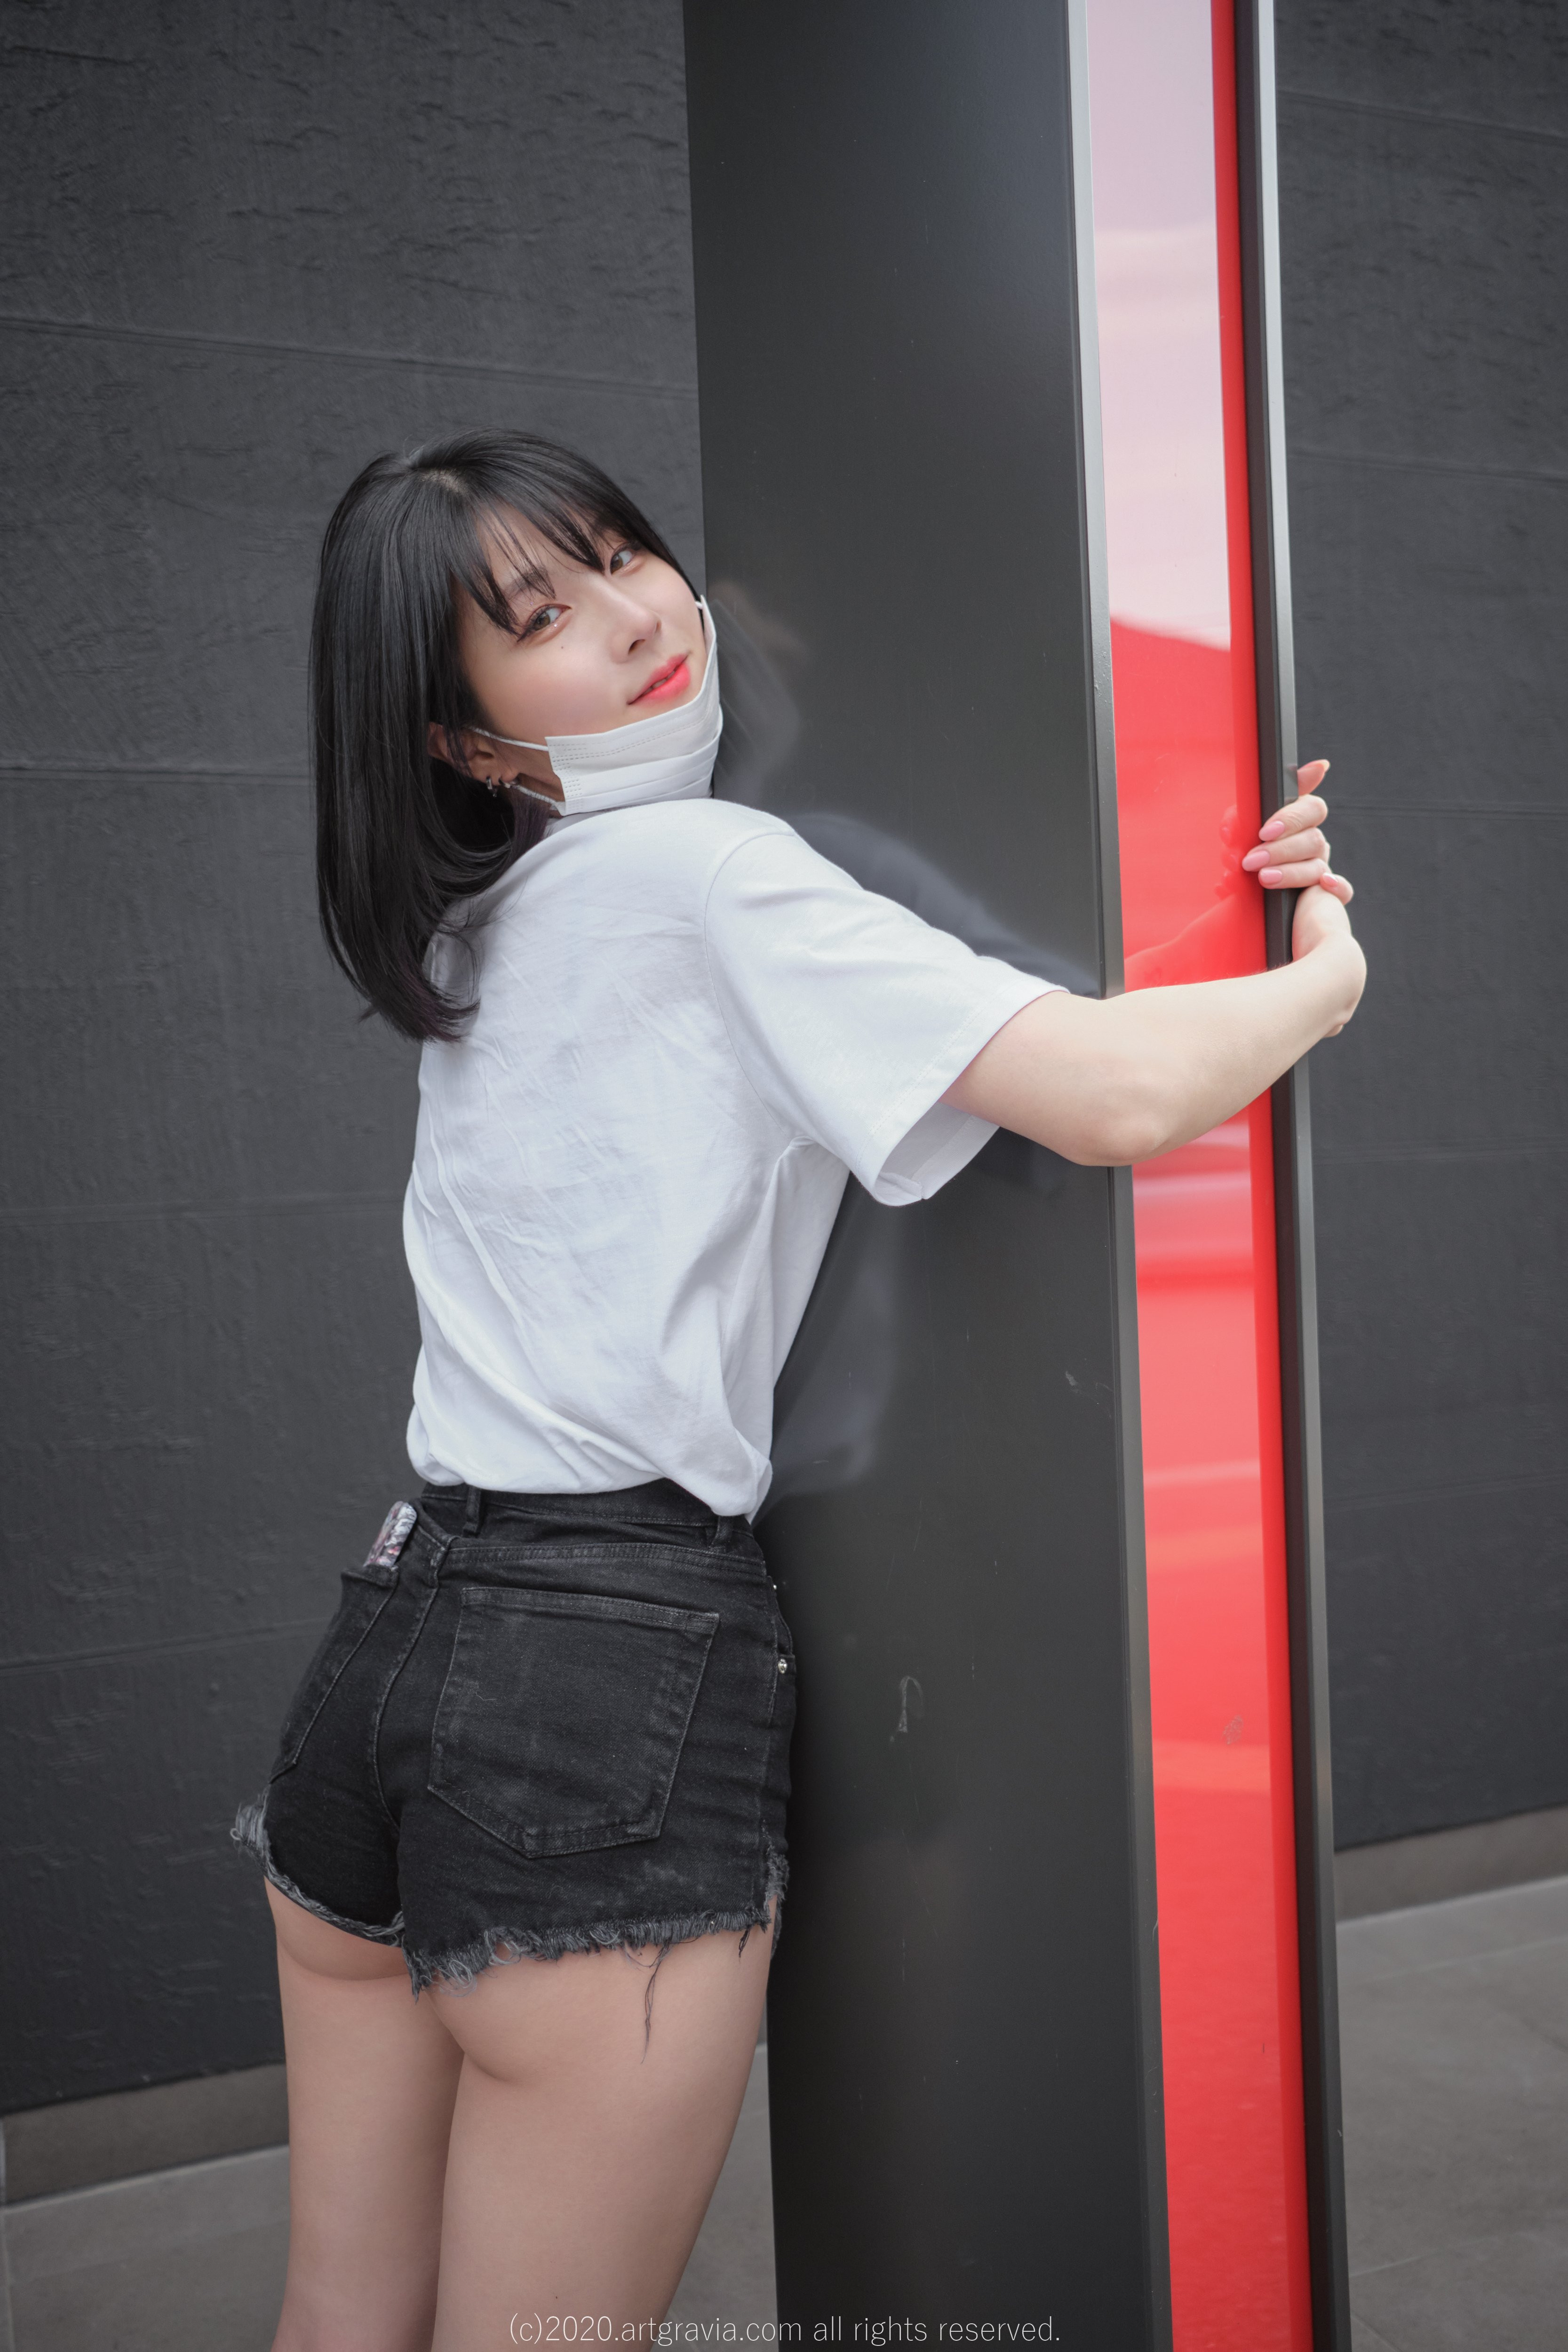 Korean Korean Women Short Pants Face Mask White T Shirt Black Hair Short Hair Looking At Viewer Asia 3333x5000